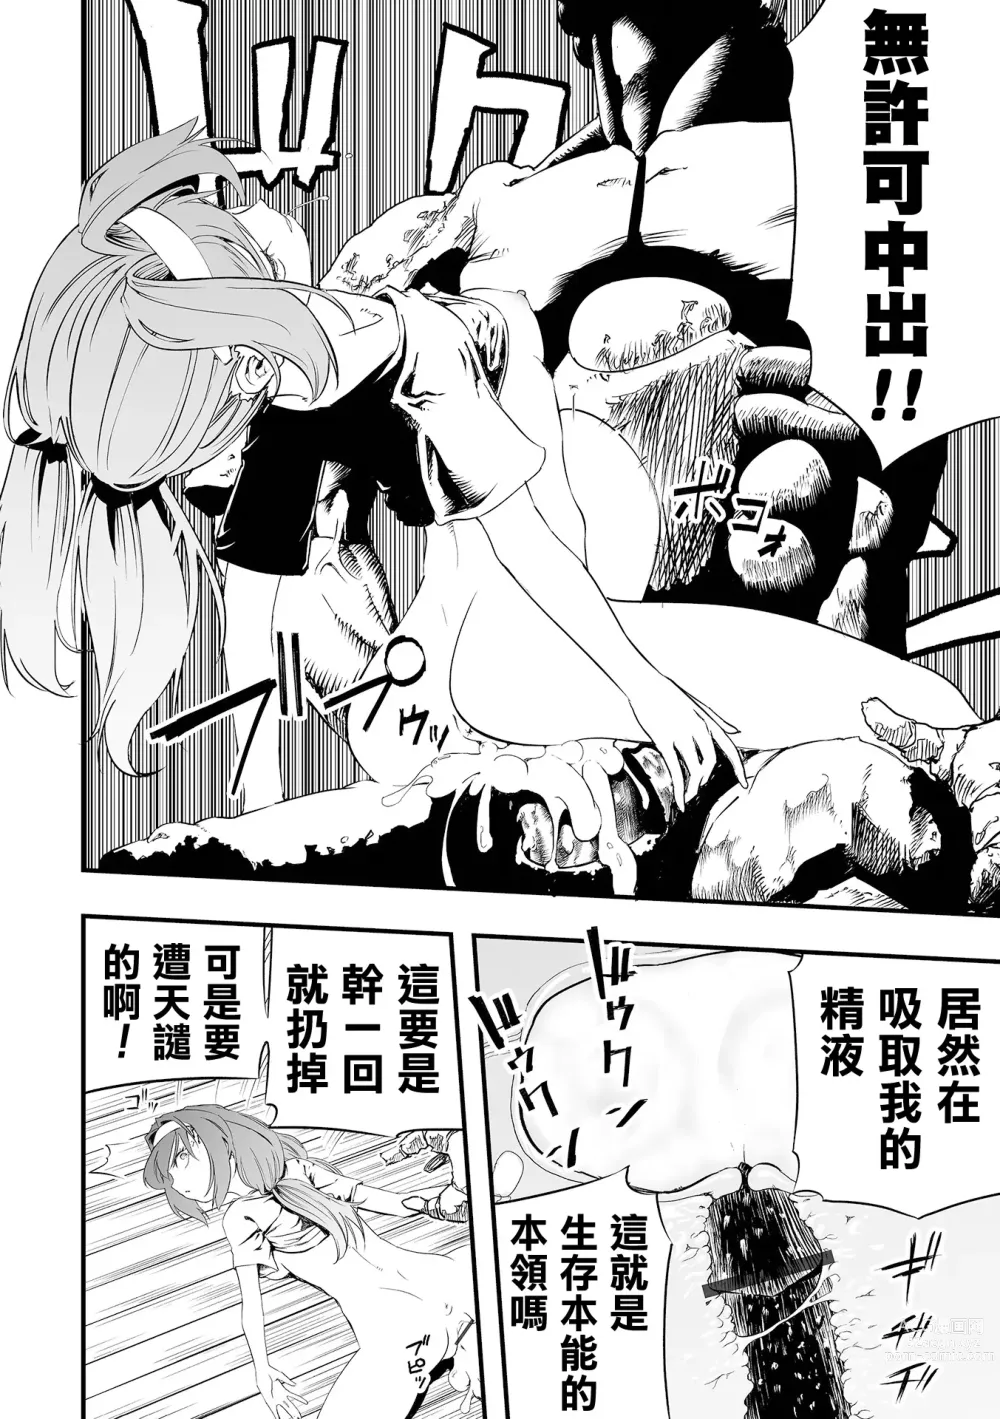 Page 15 of manga 鄰居的壁咚X